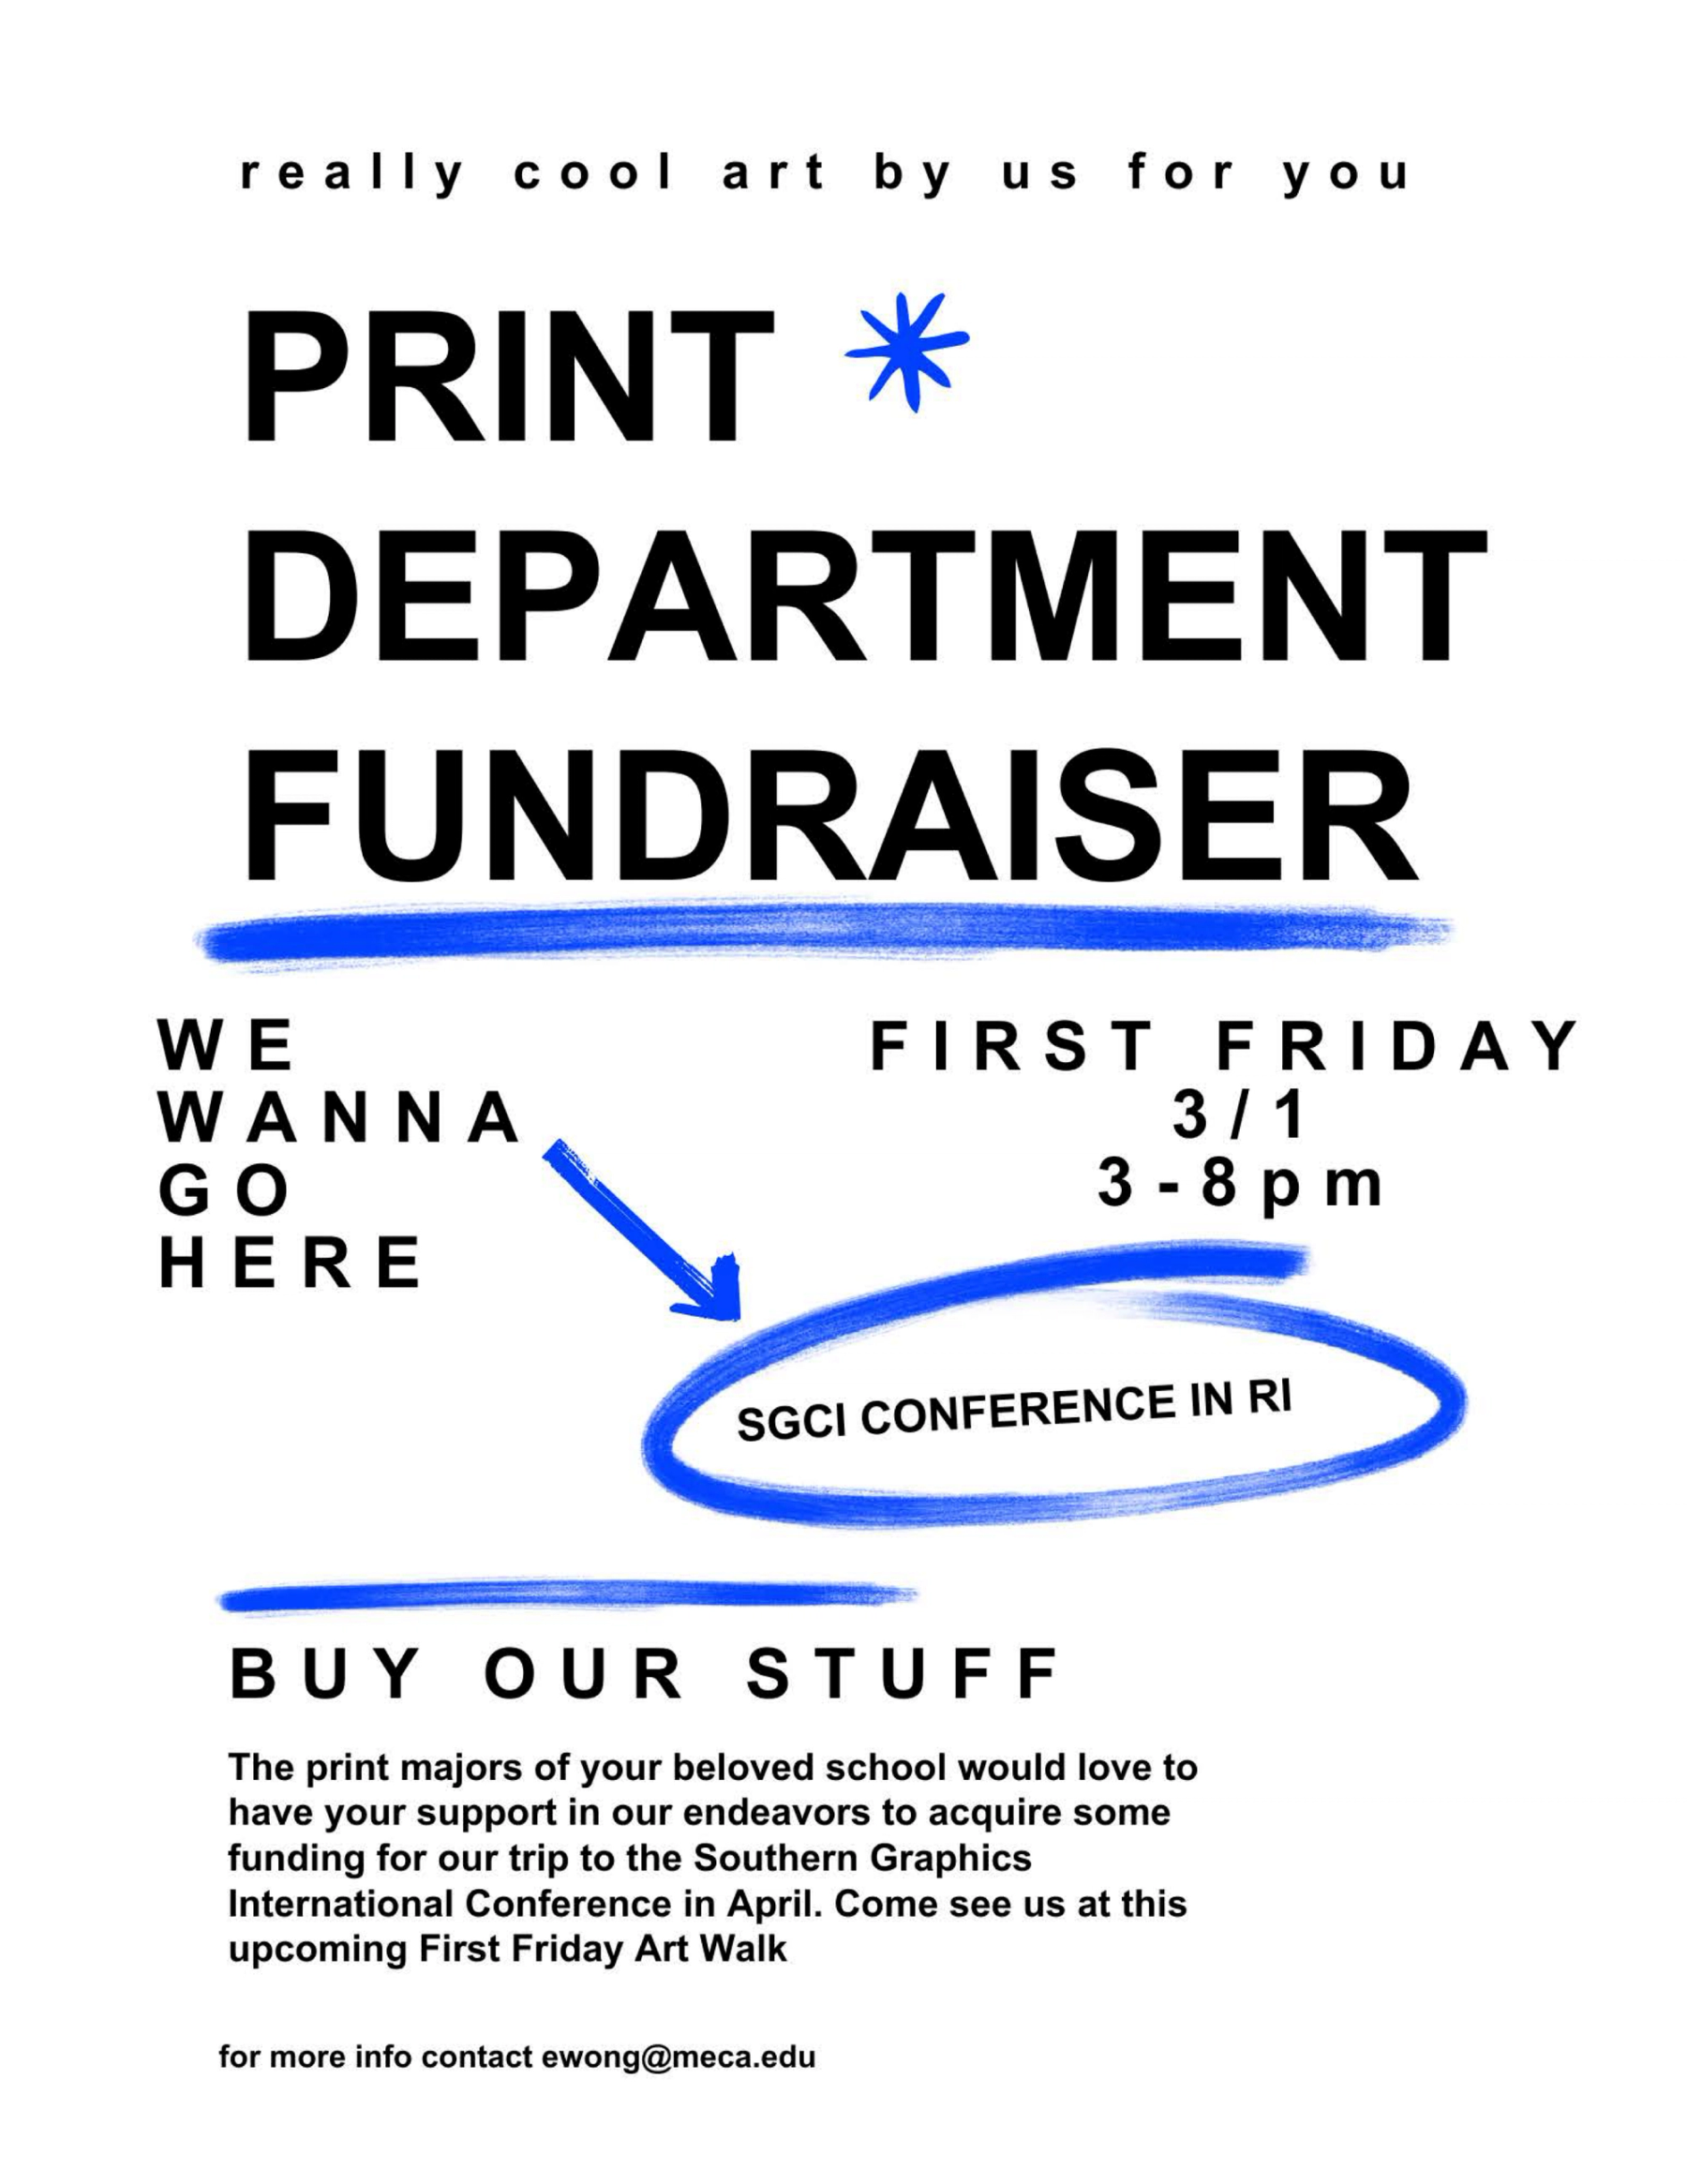 Print Department Fundraiser flyer